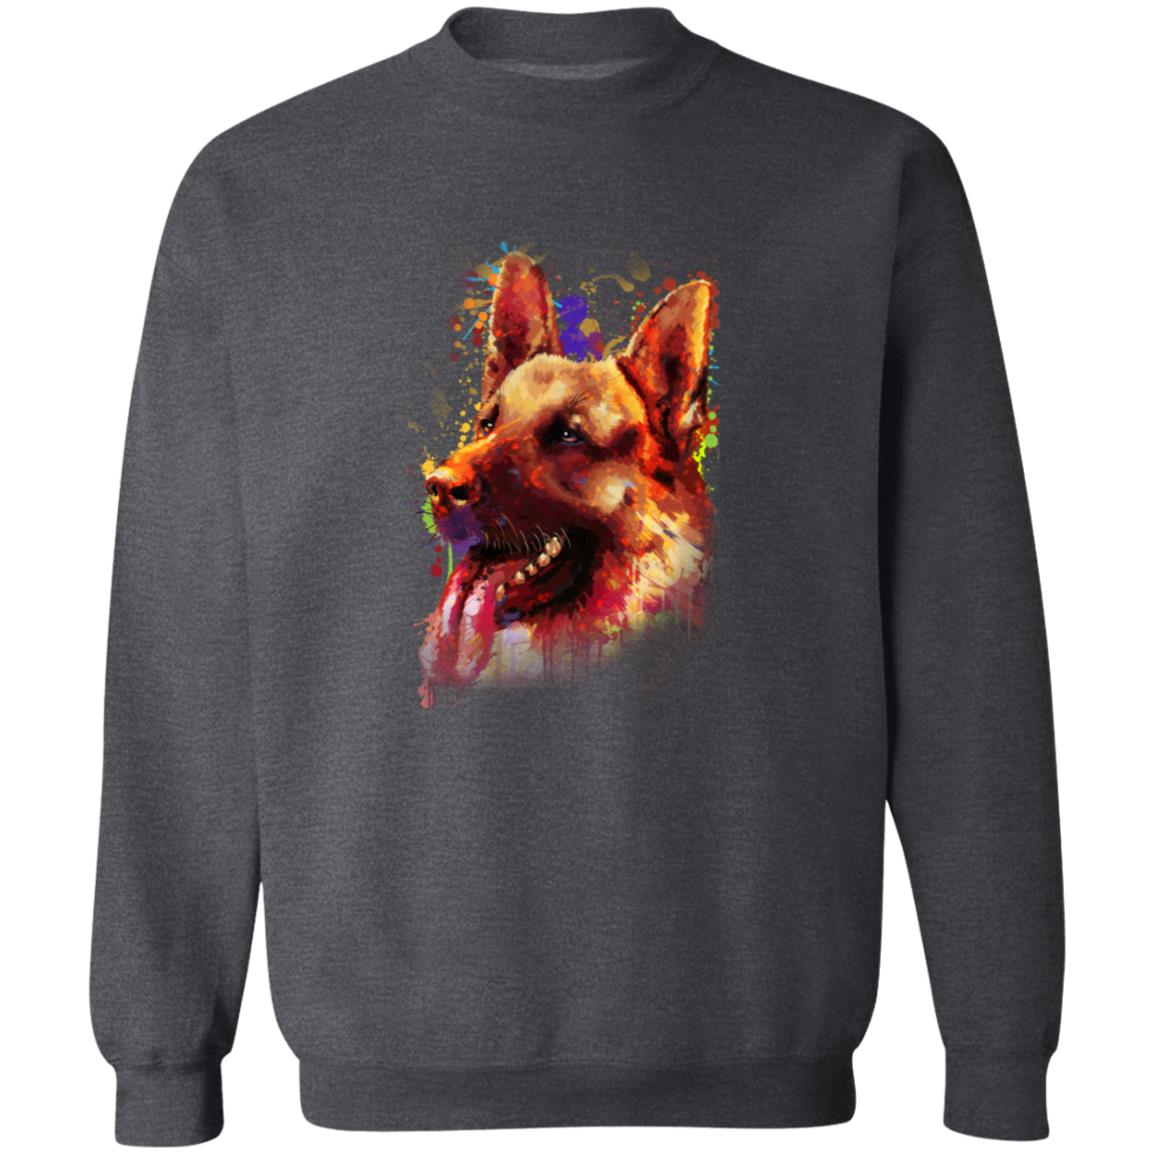 Abstract German shepherd dog Unisex Crewneck Sweatshirt with expressive splashes-Family-Gift-Planet